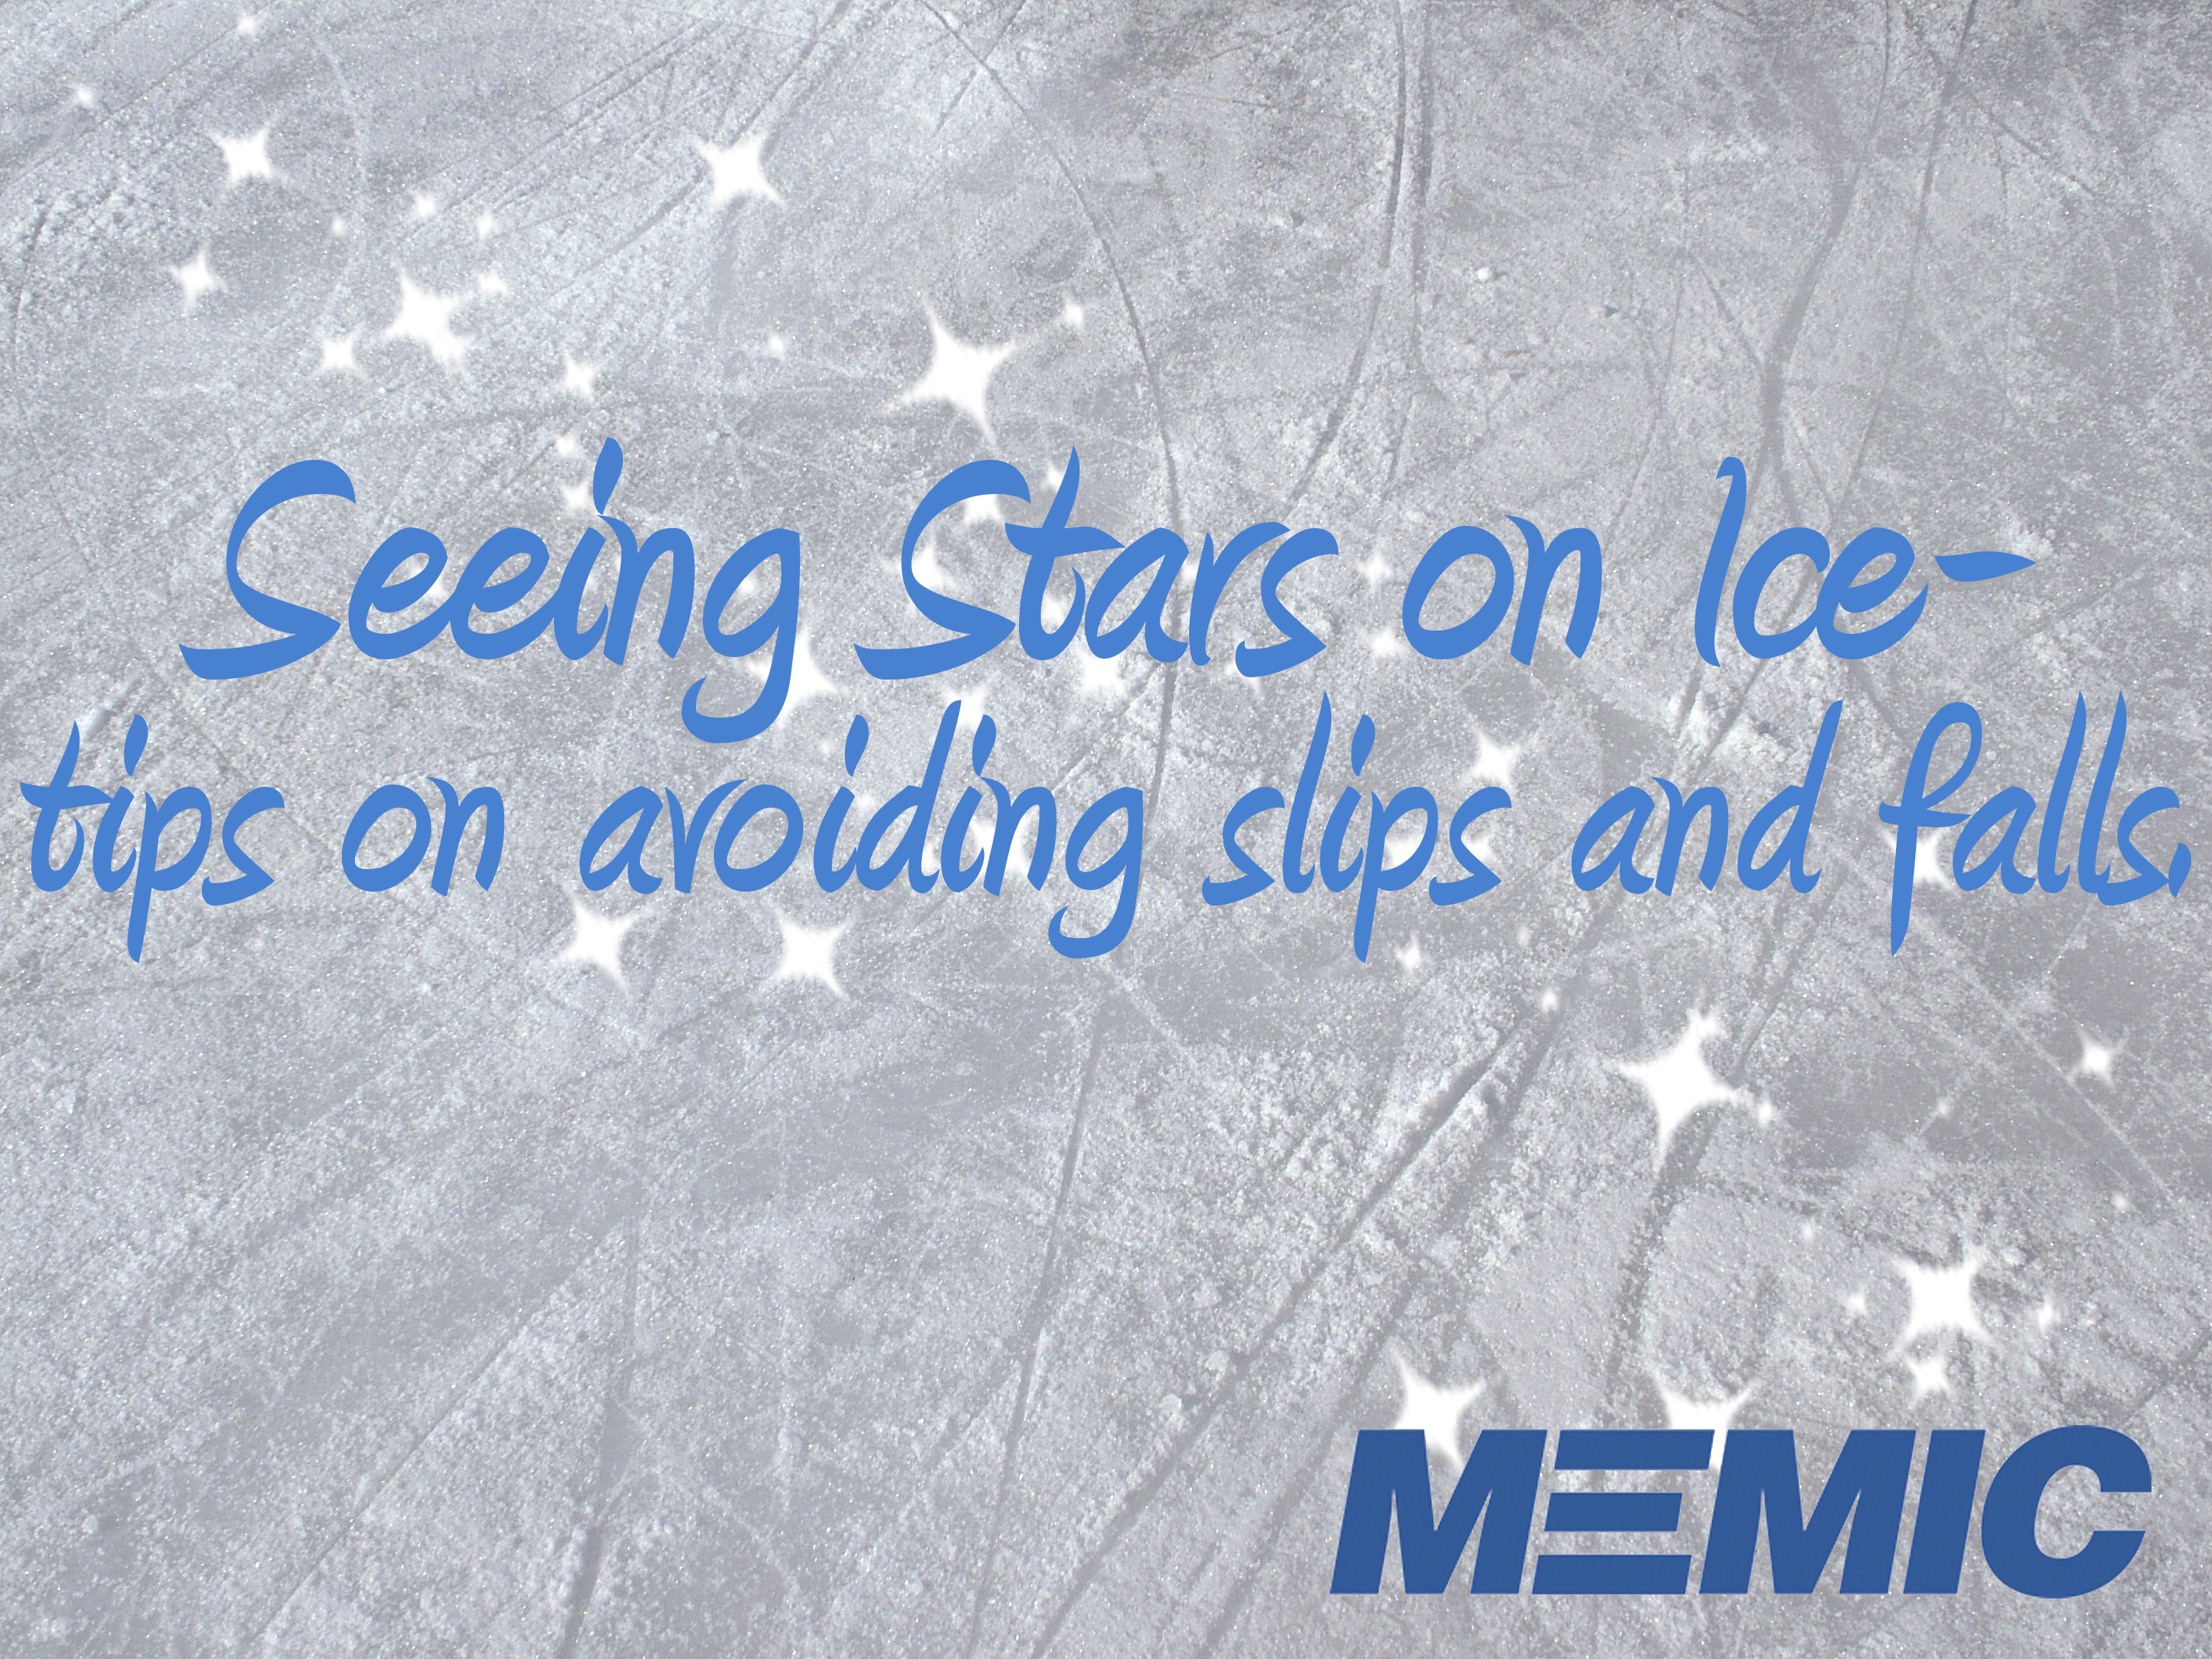 Seeing stars on ice.